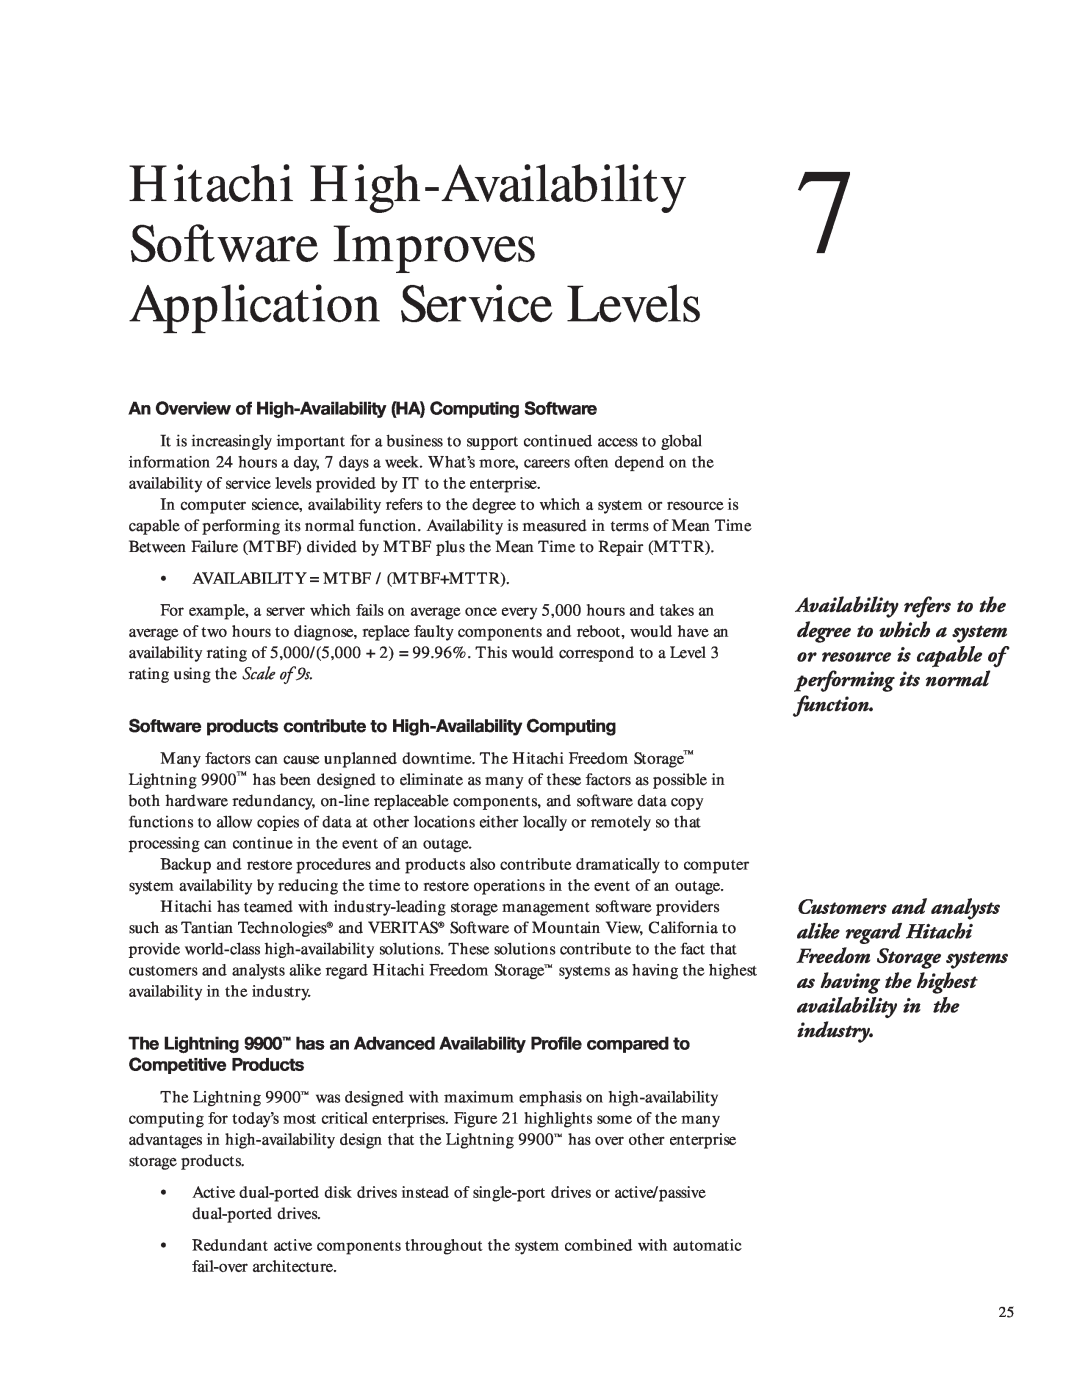 Hitachi 9960, 9900 Series manual Hitachi High-Availability Software Improves, Application Service Levels 